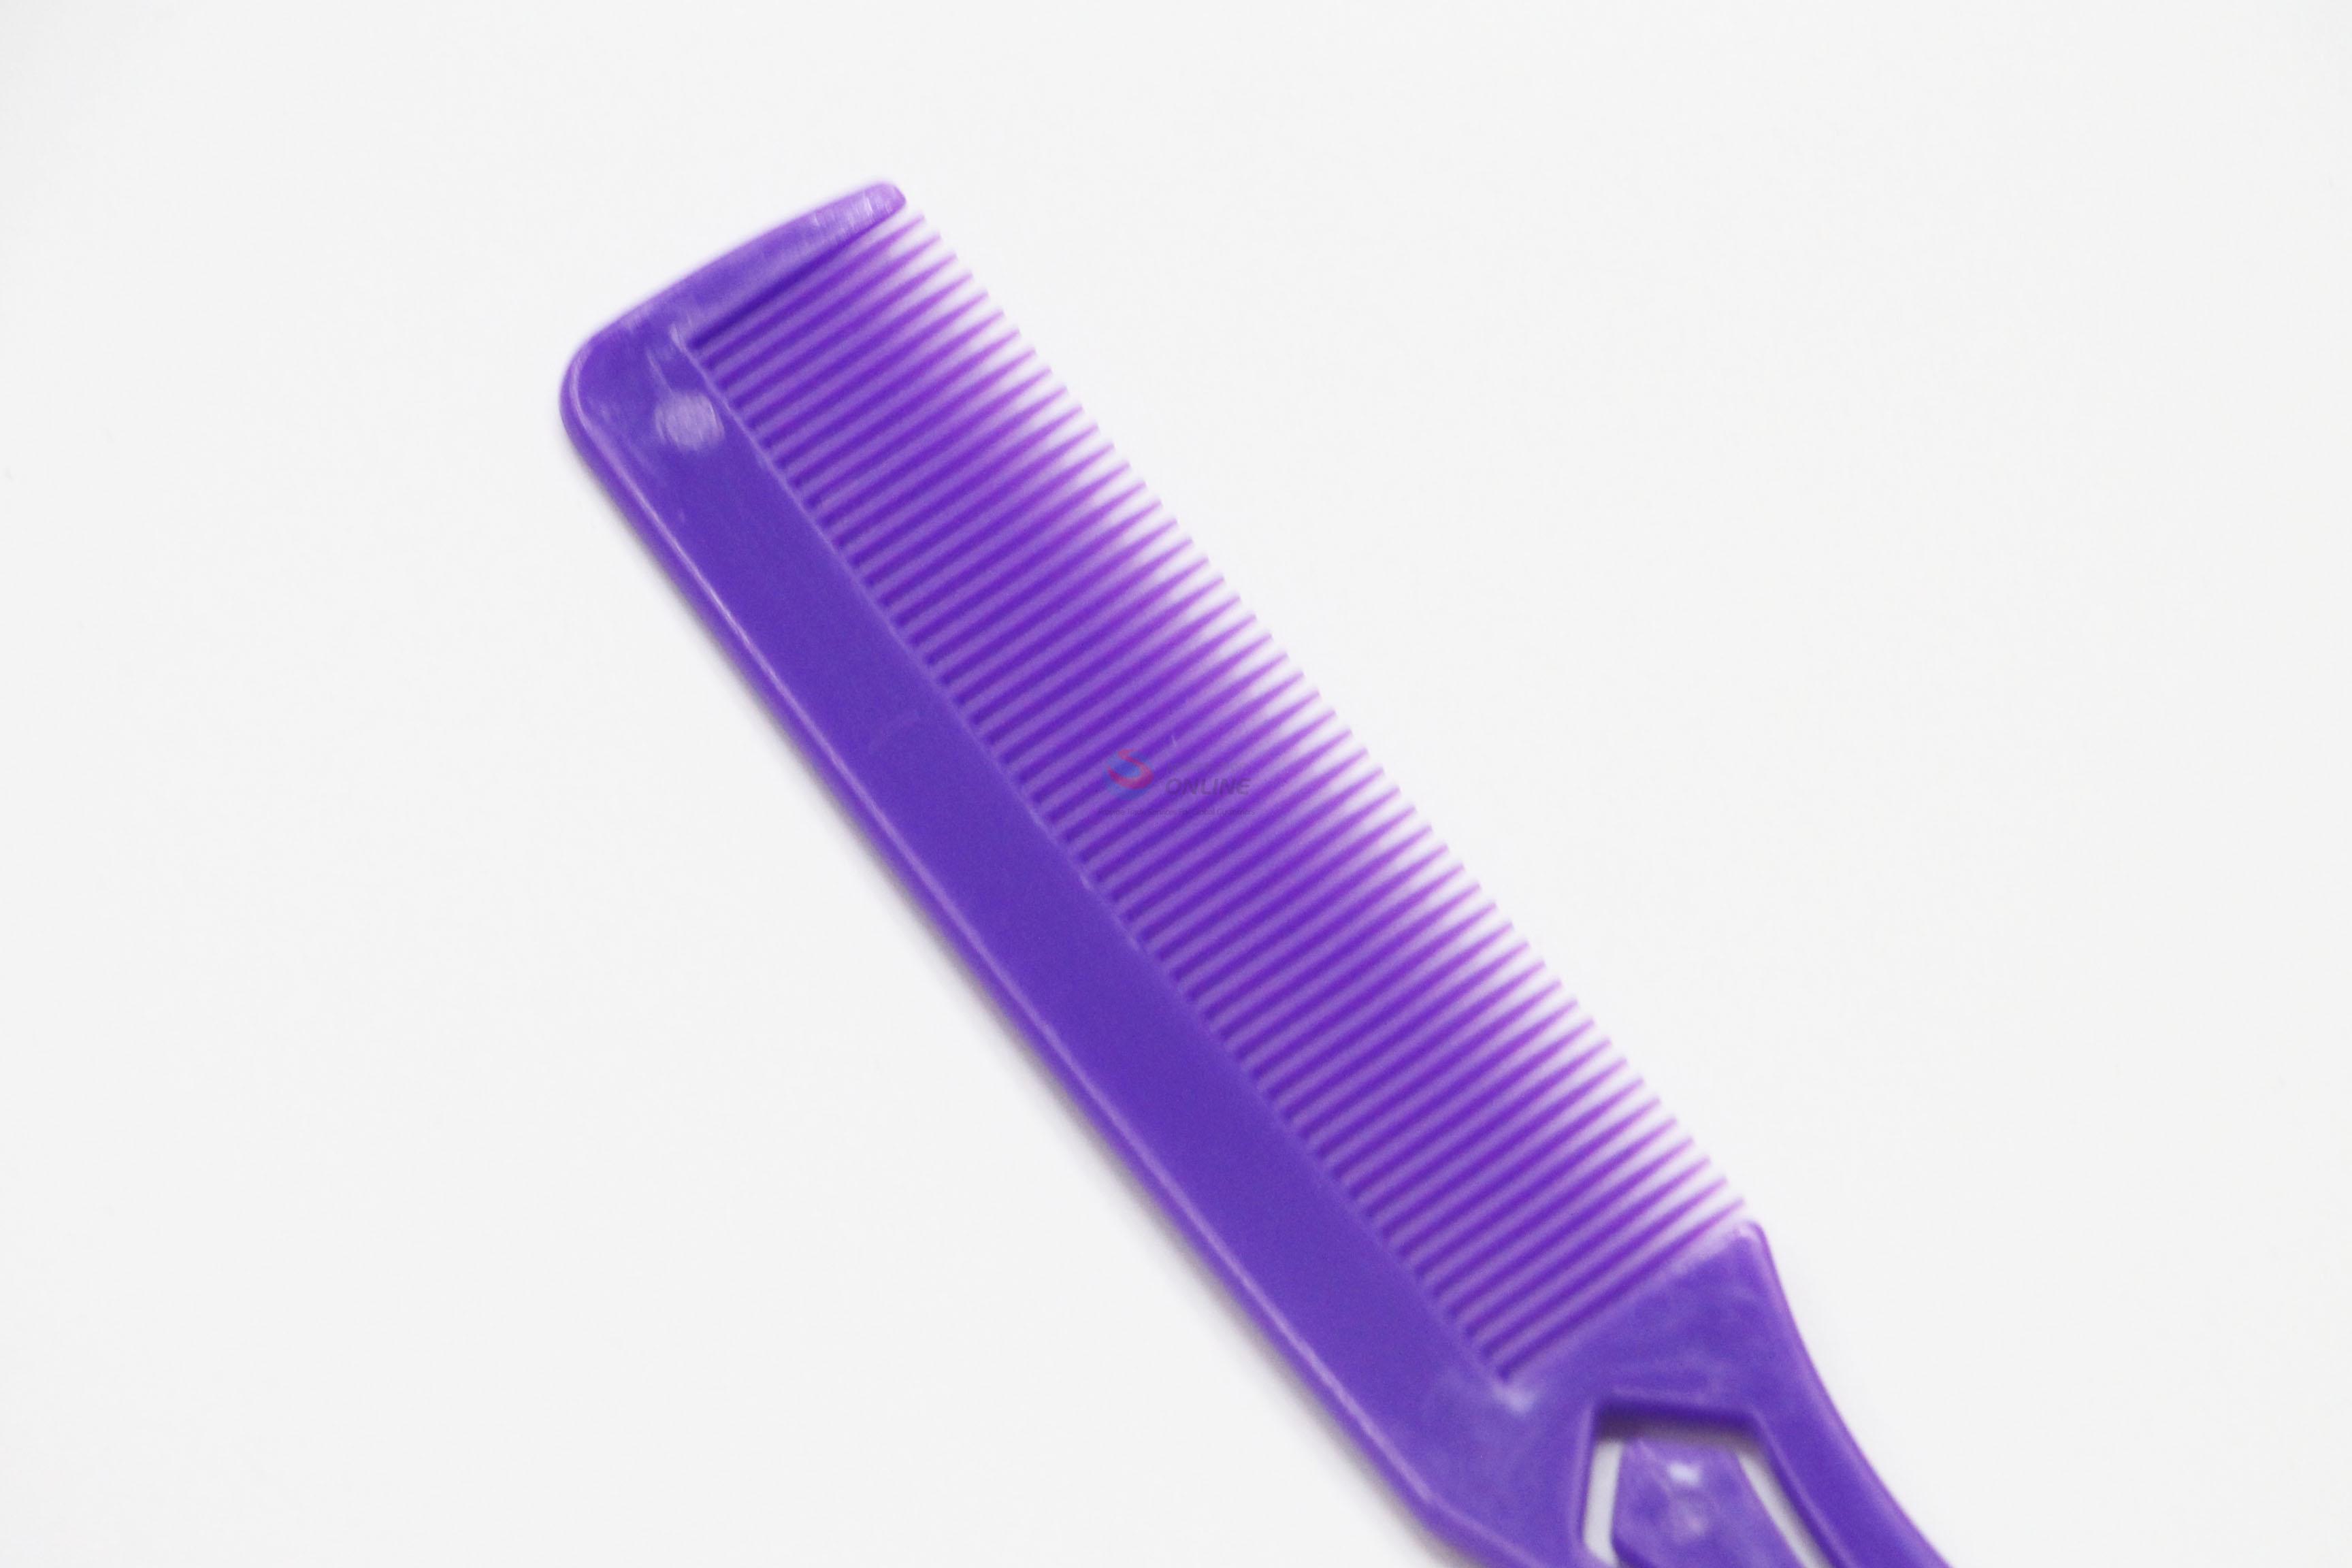 Cheapest Colorful Plastic Comb